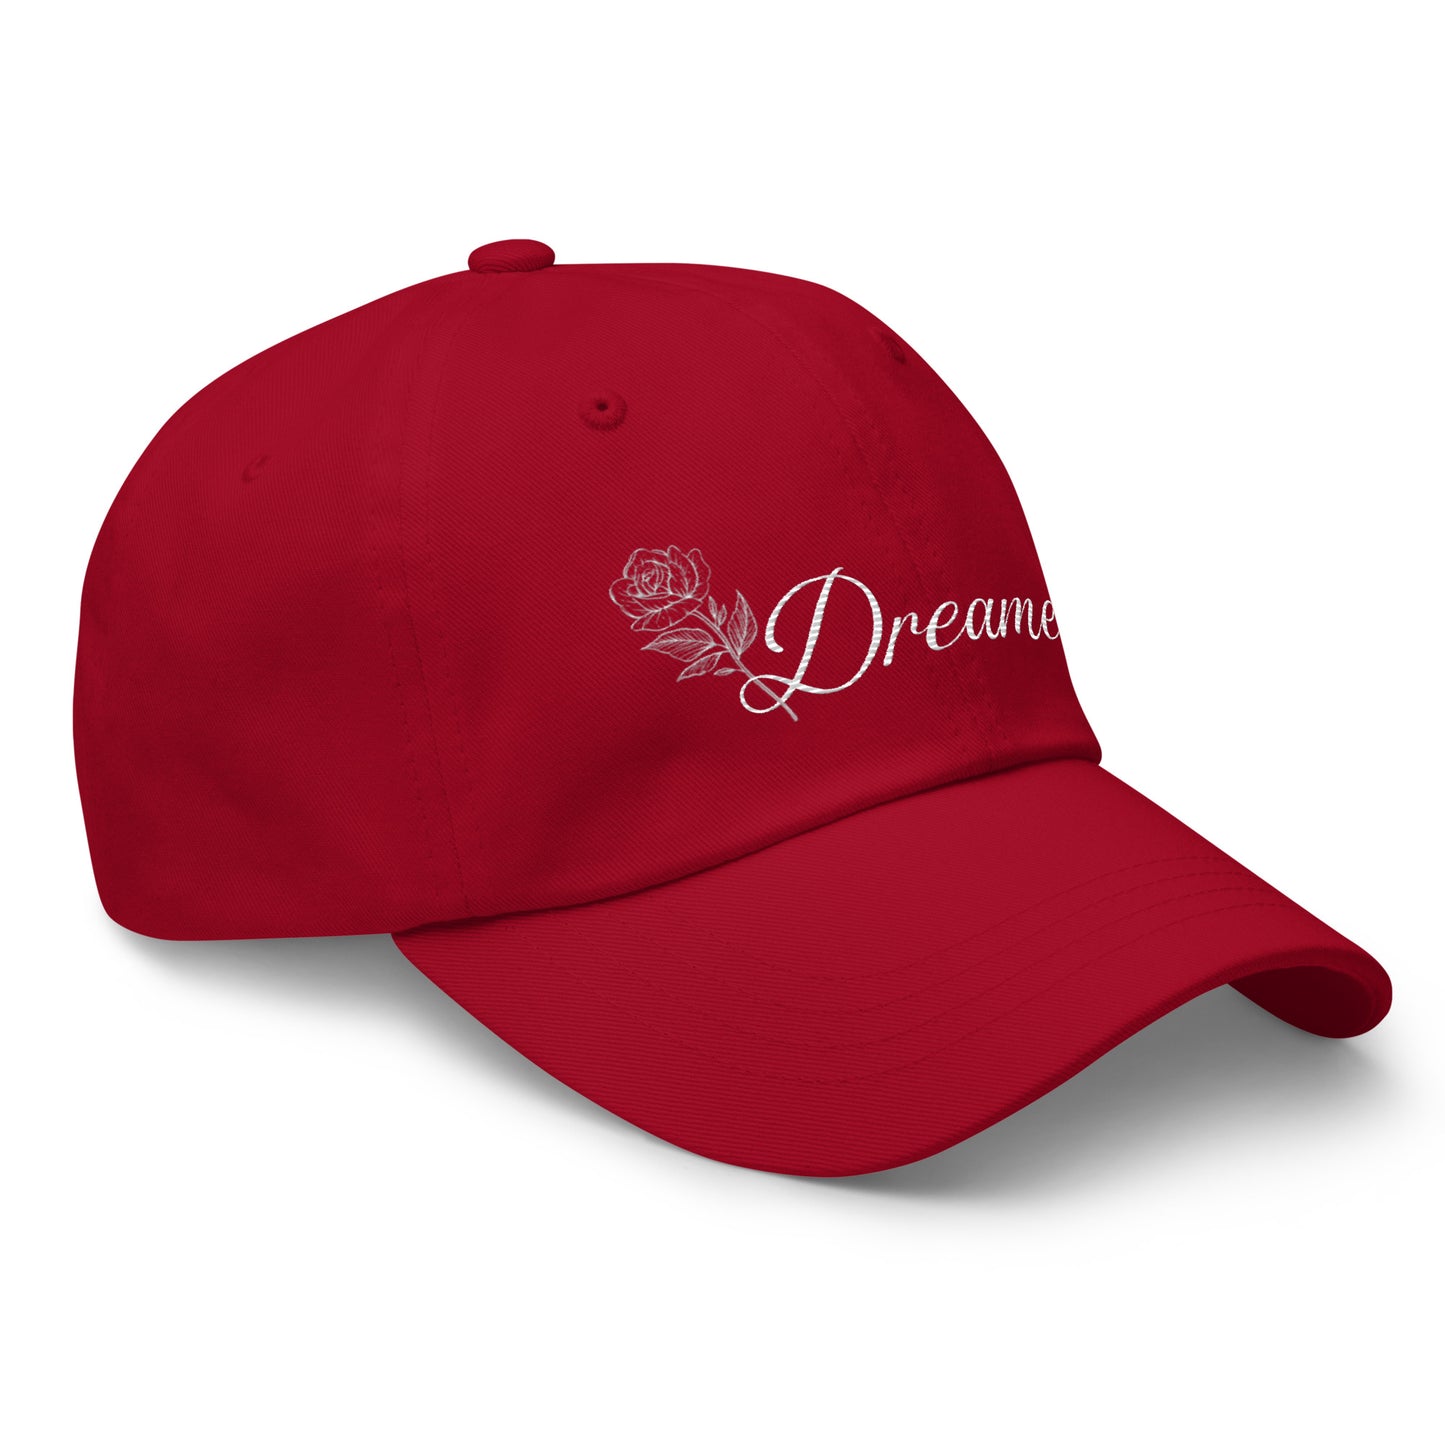 Dreamers Licensed Dad hat